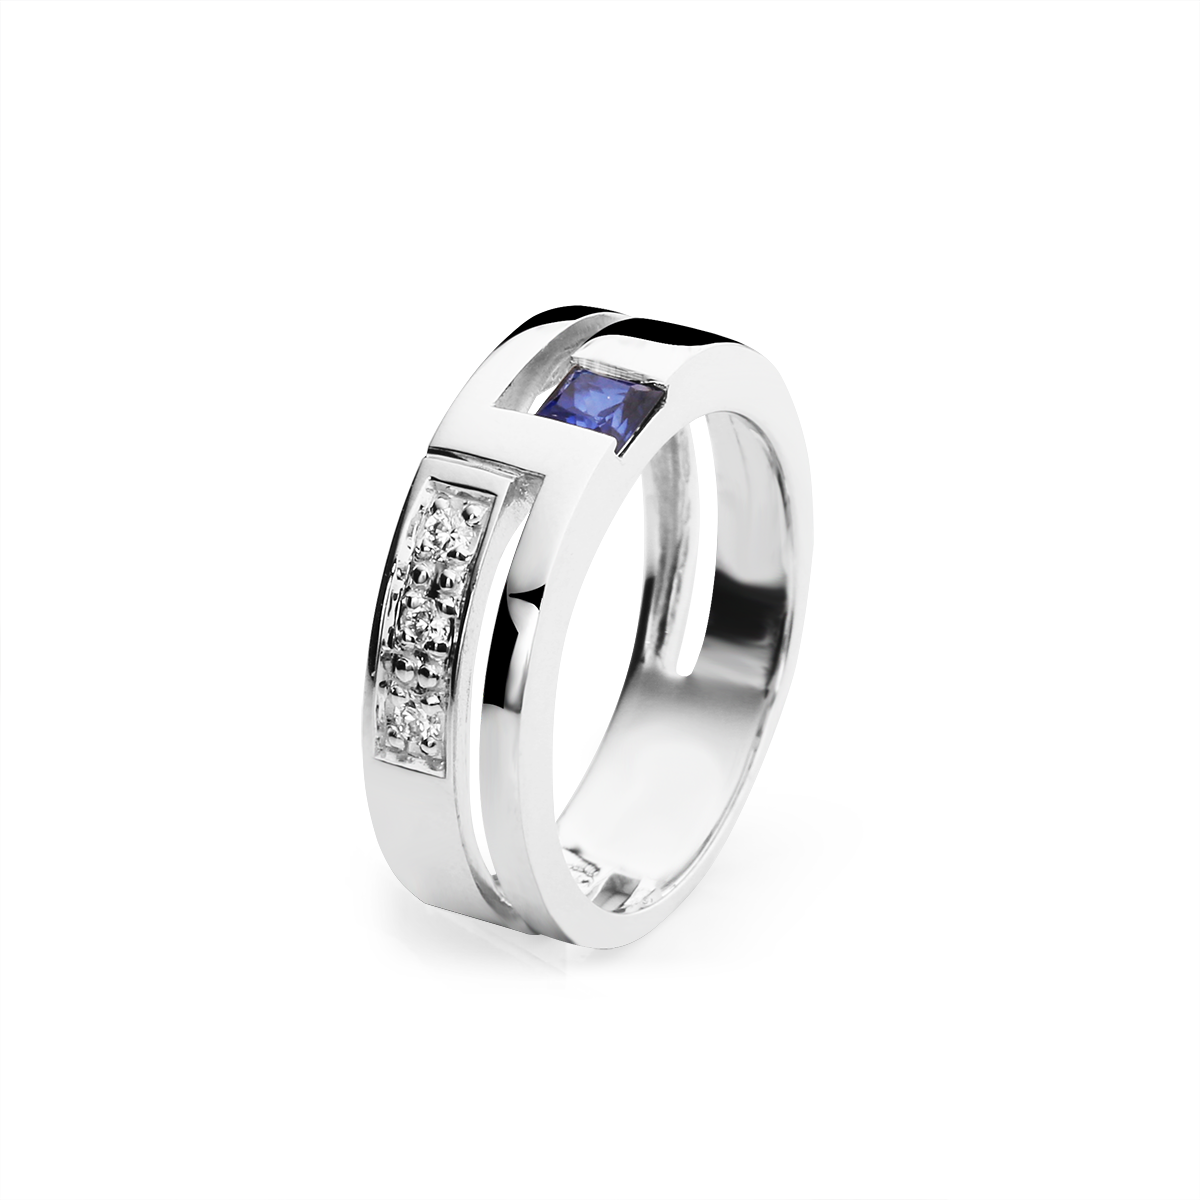 diamond 0,02 ct - 3 x; blue sapphire 3,5 x 3,5 mm - 1 x